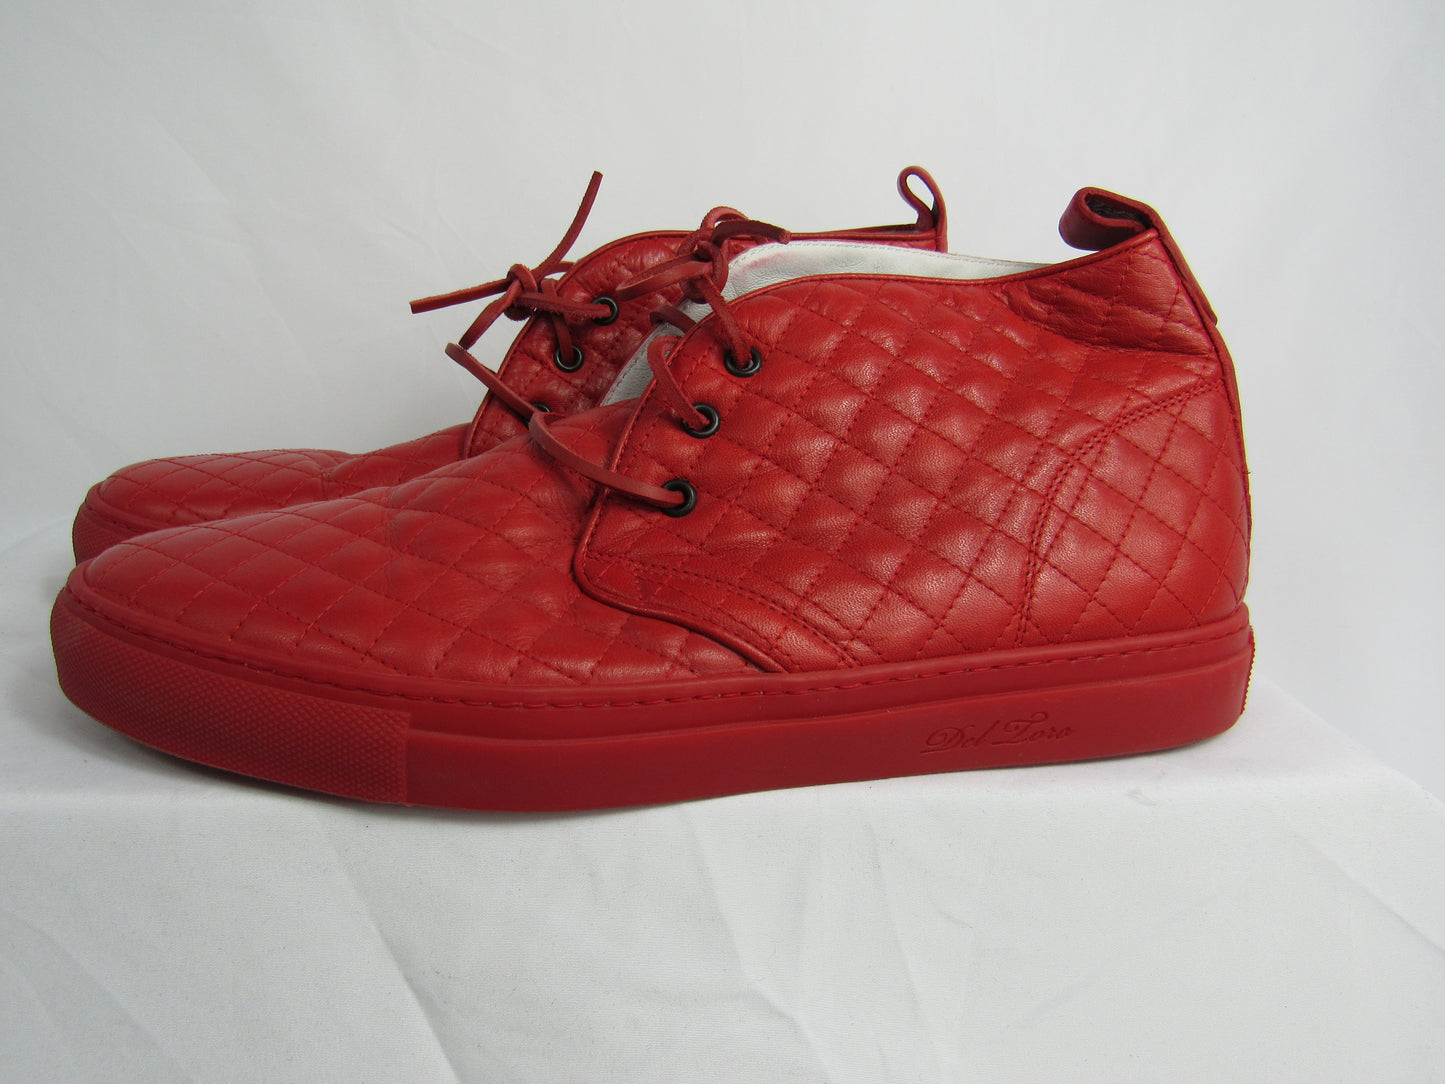 DEL TOROS Sneakers - Size 11